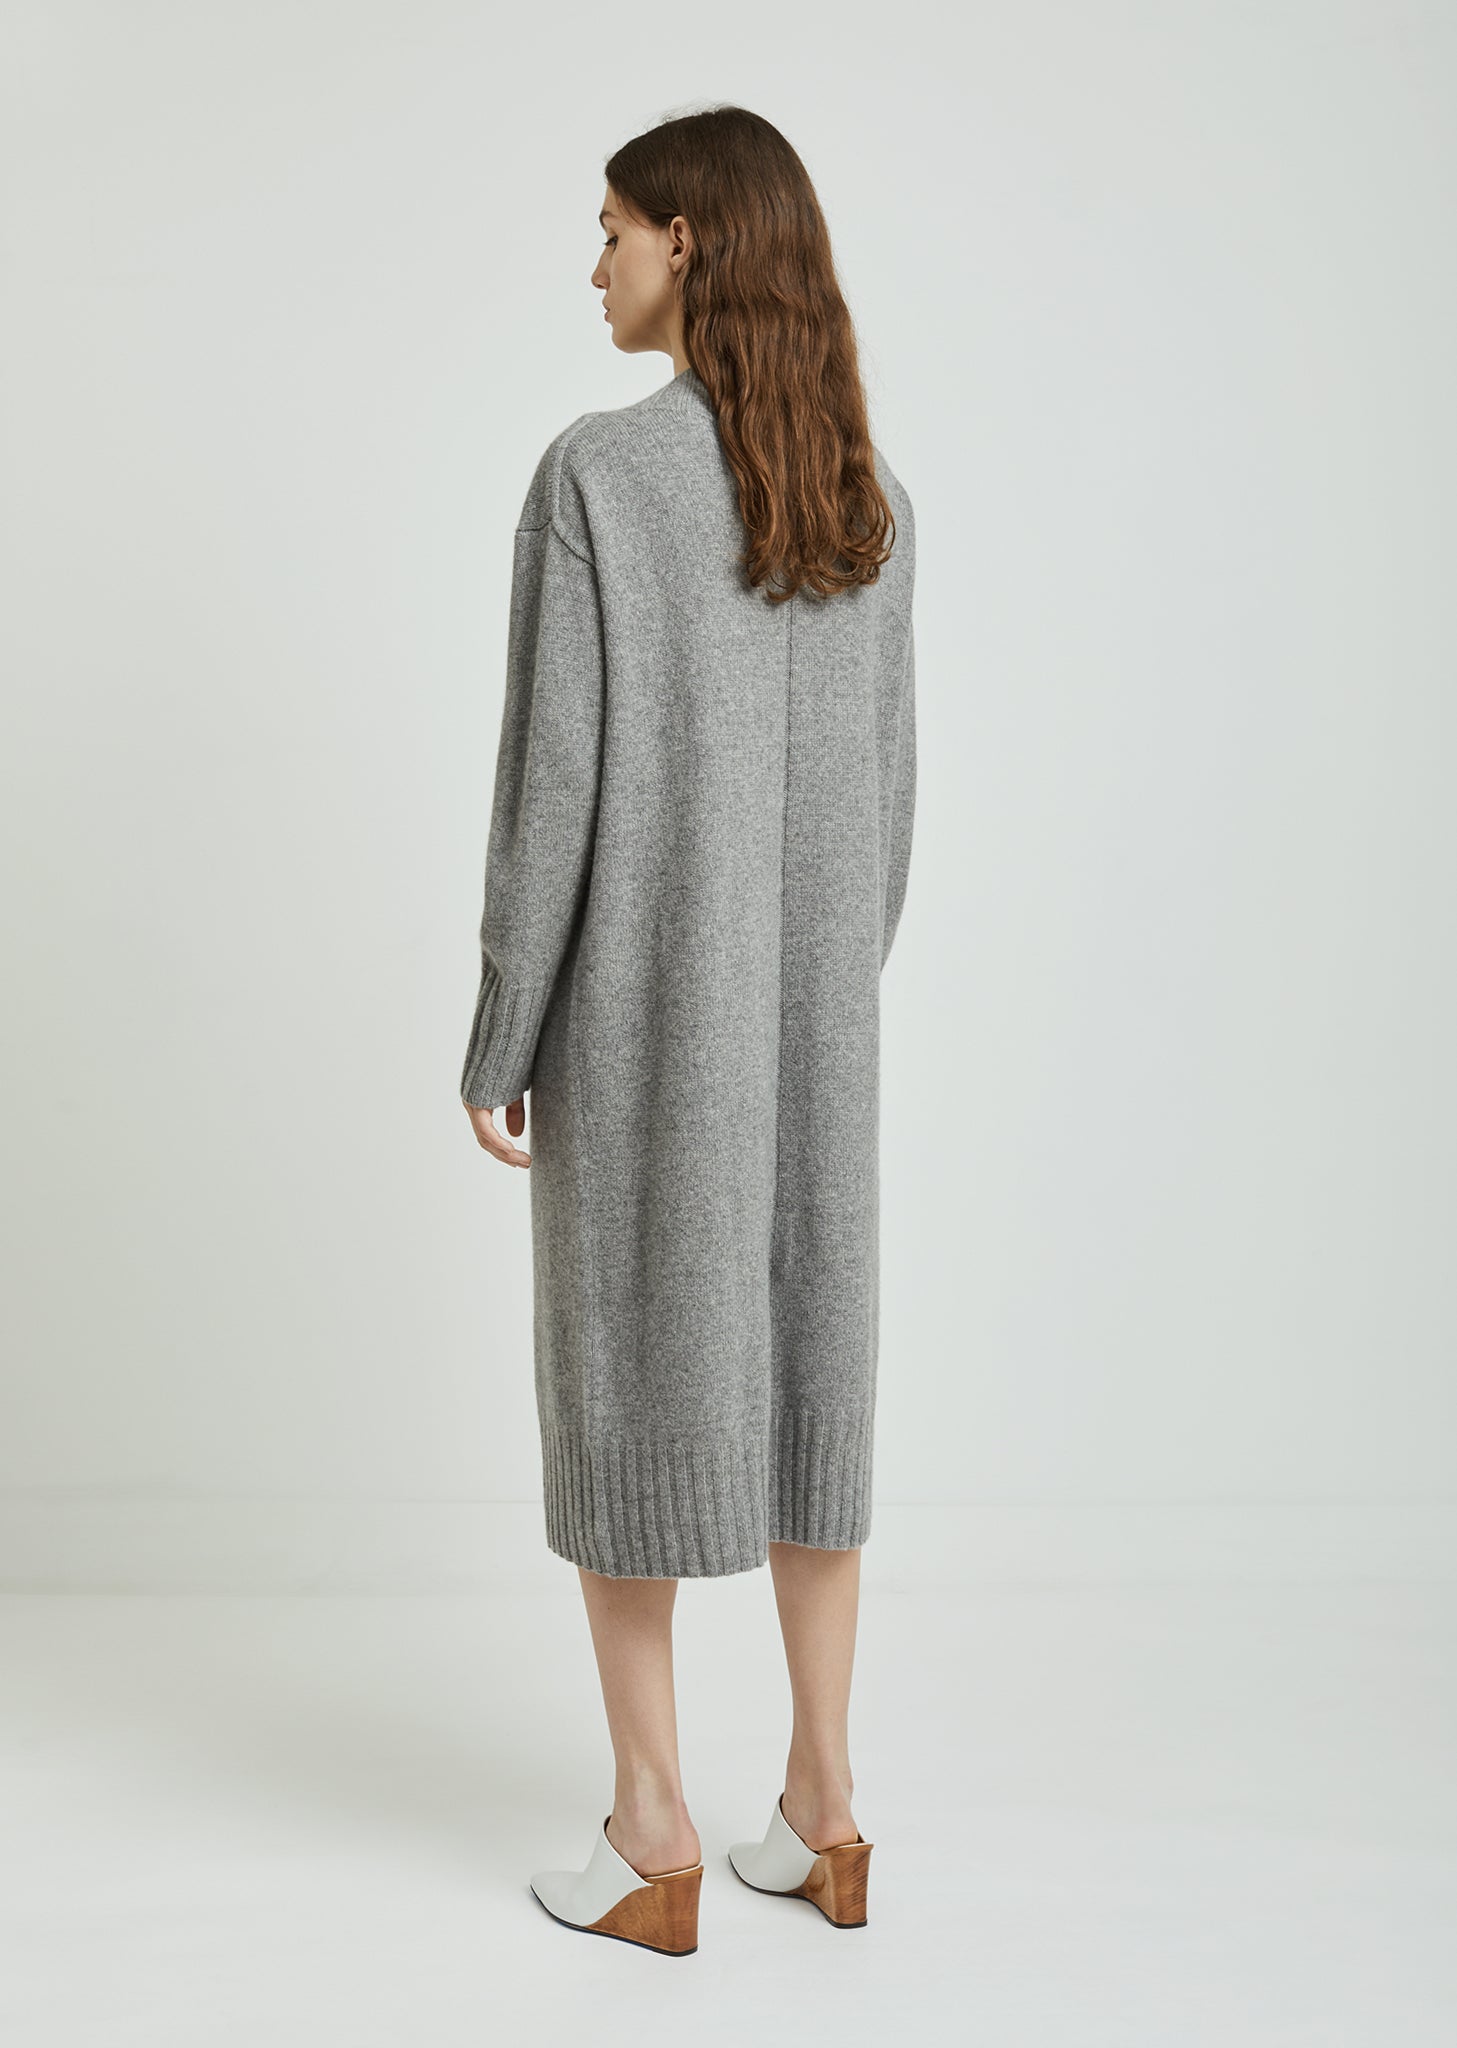 cashmere knit dress